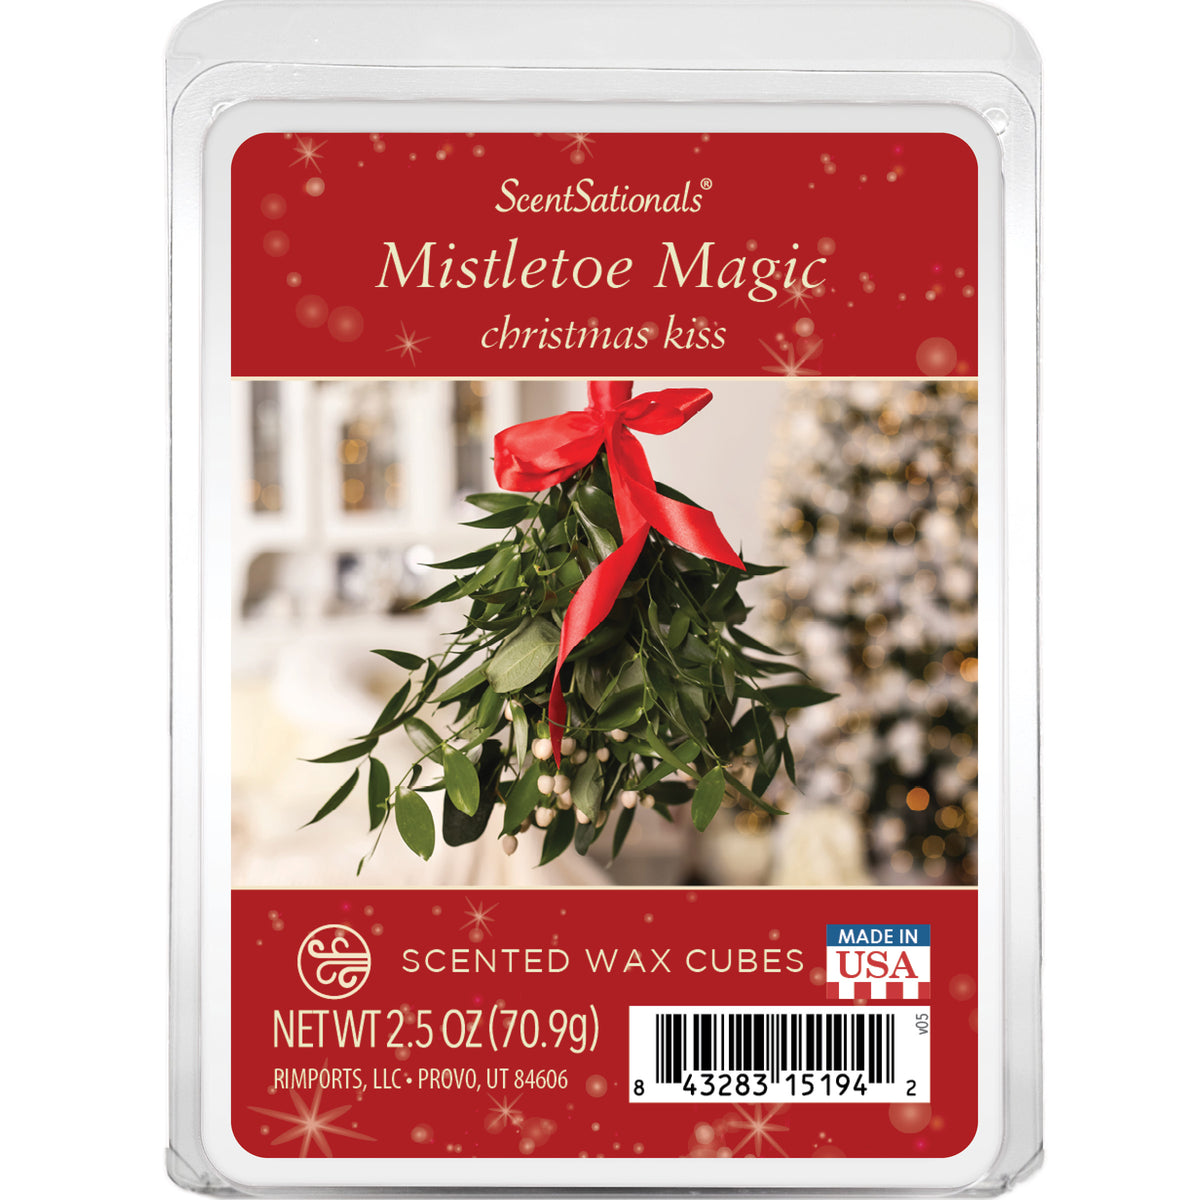 Mistletoe Soy Eco Wax Melt — Nectar Republic